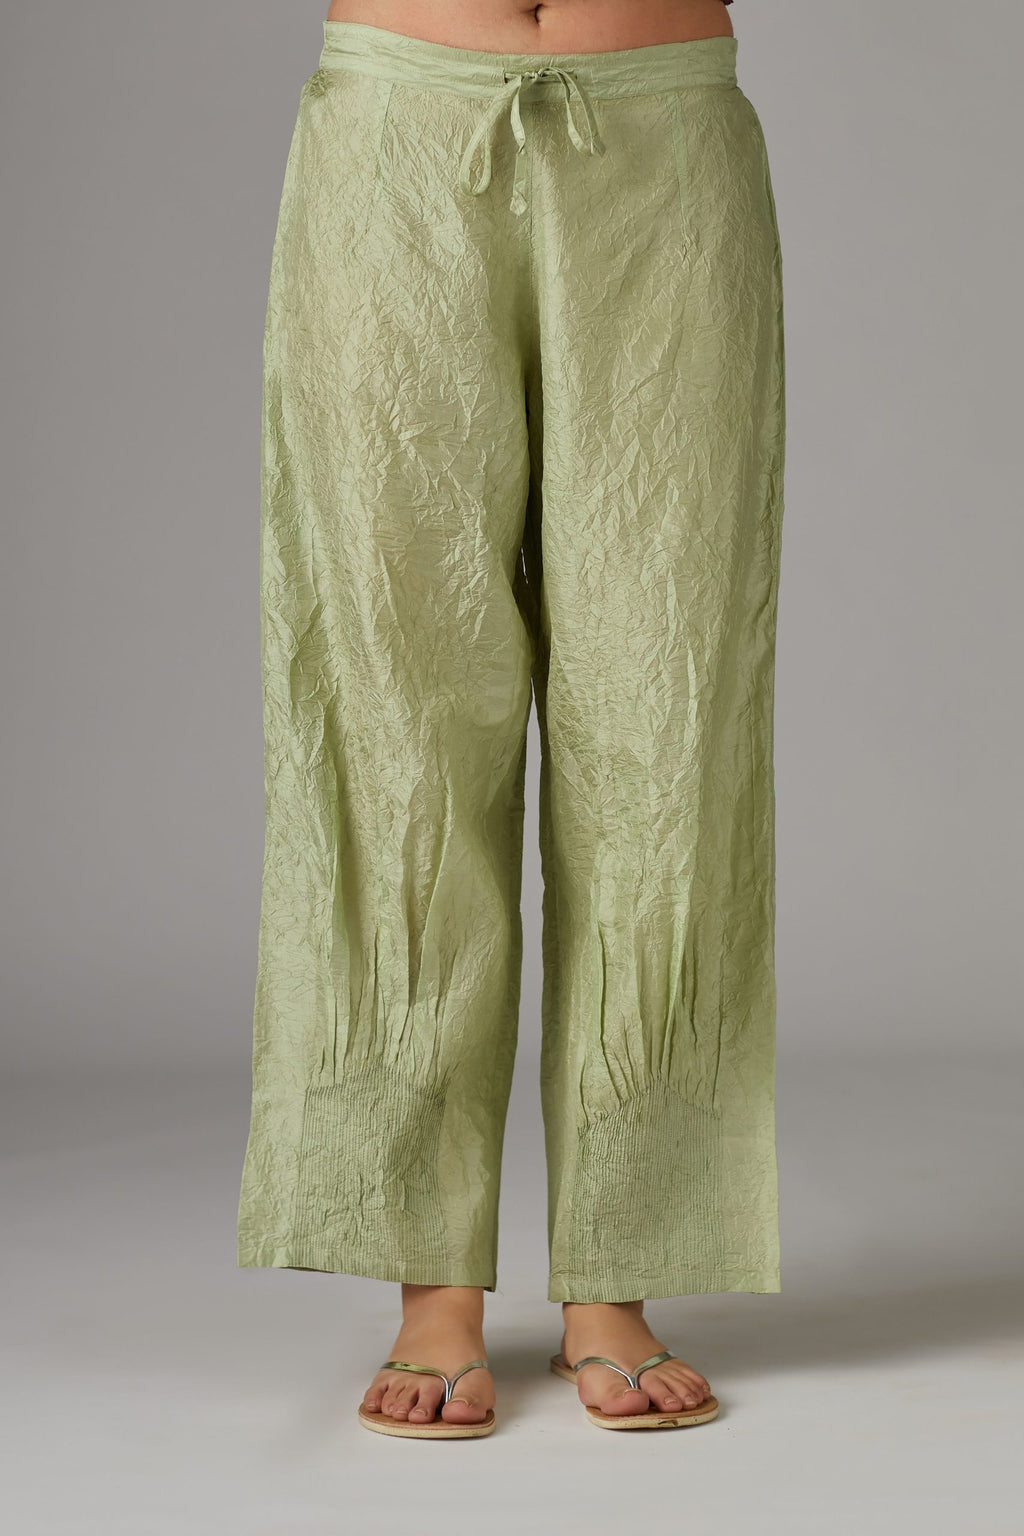 Apple green straight crushed silk pants with pin tucks at hem